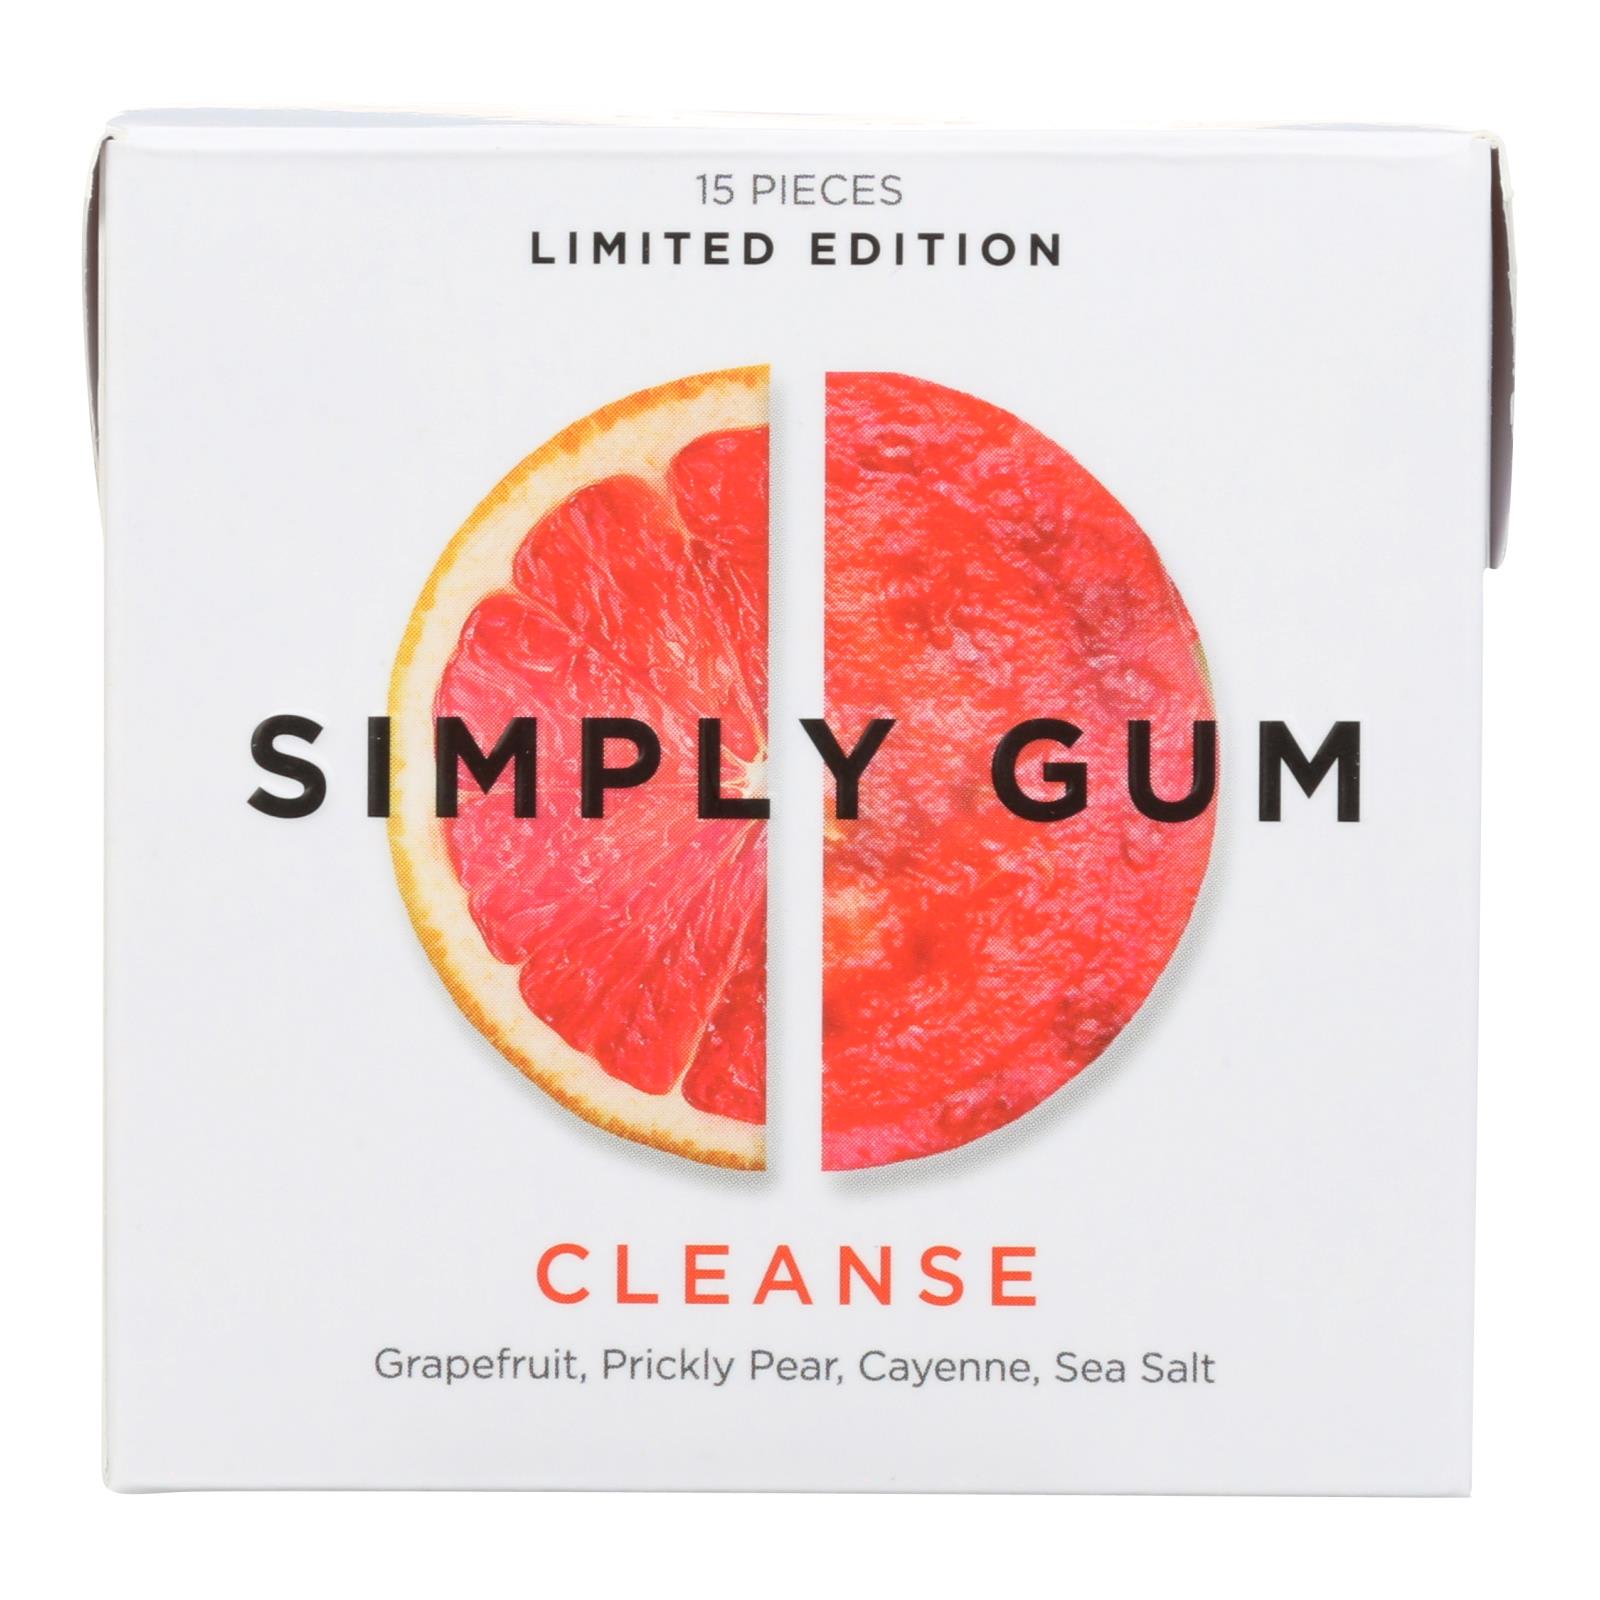 Simply Gum - Gum Cleanse - 12개 묶음상품 - 15 CT